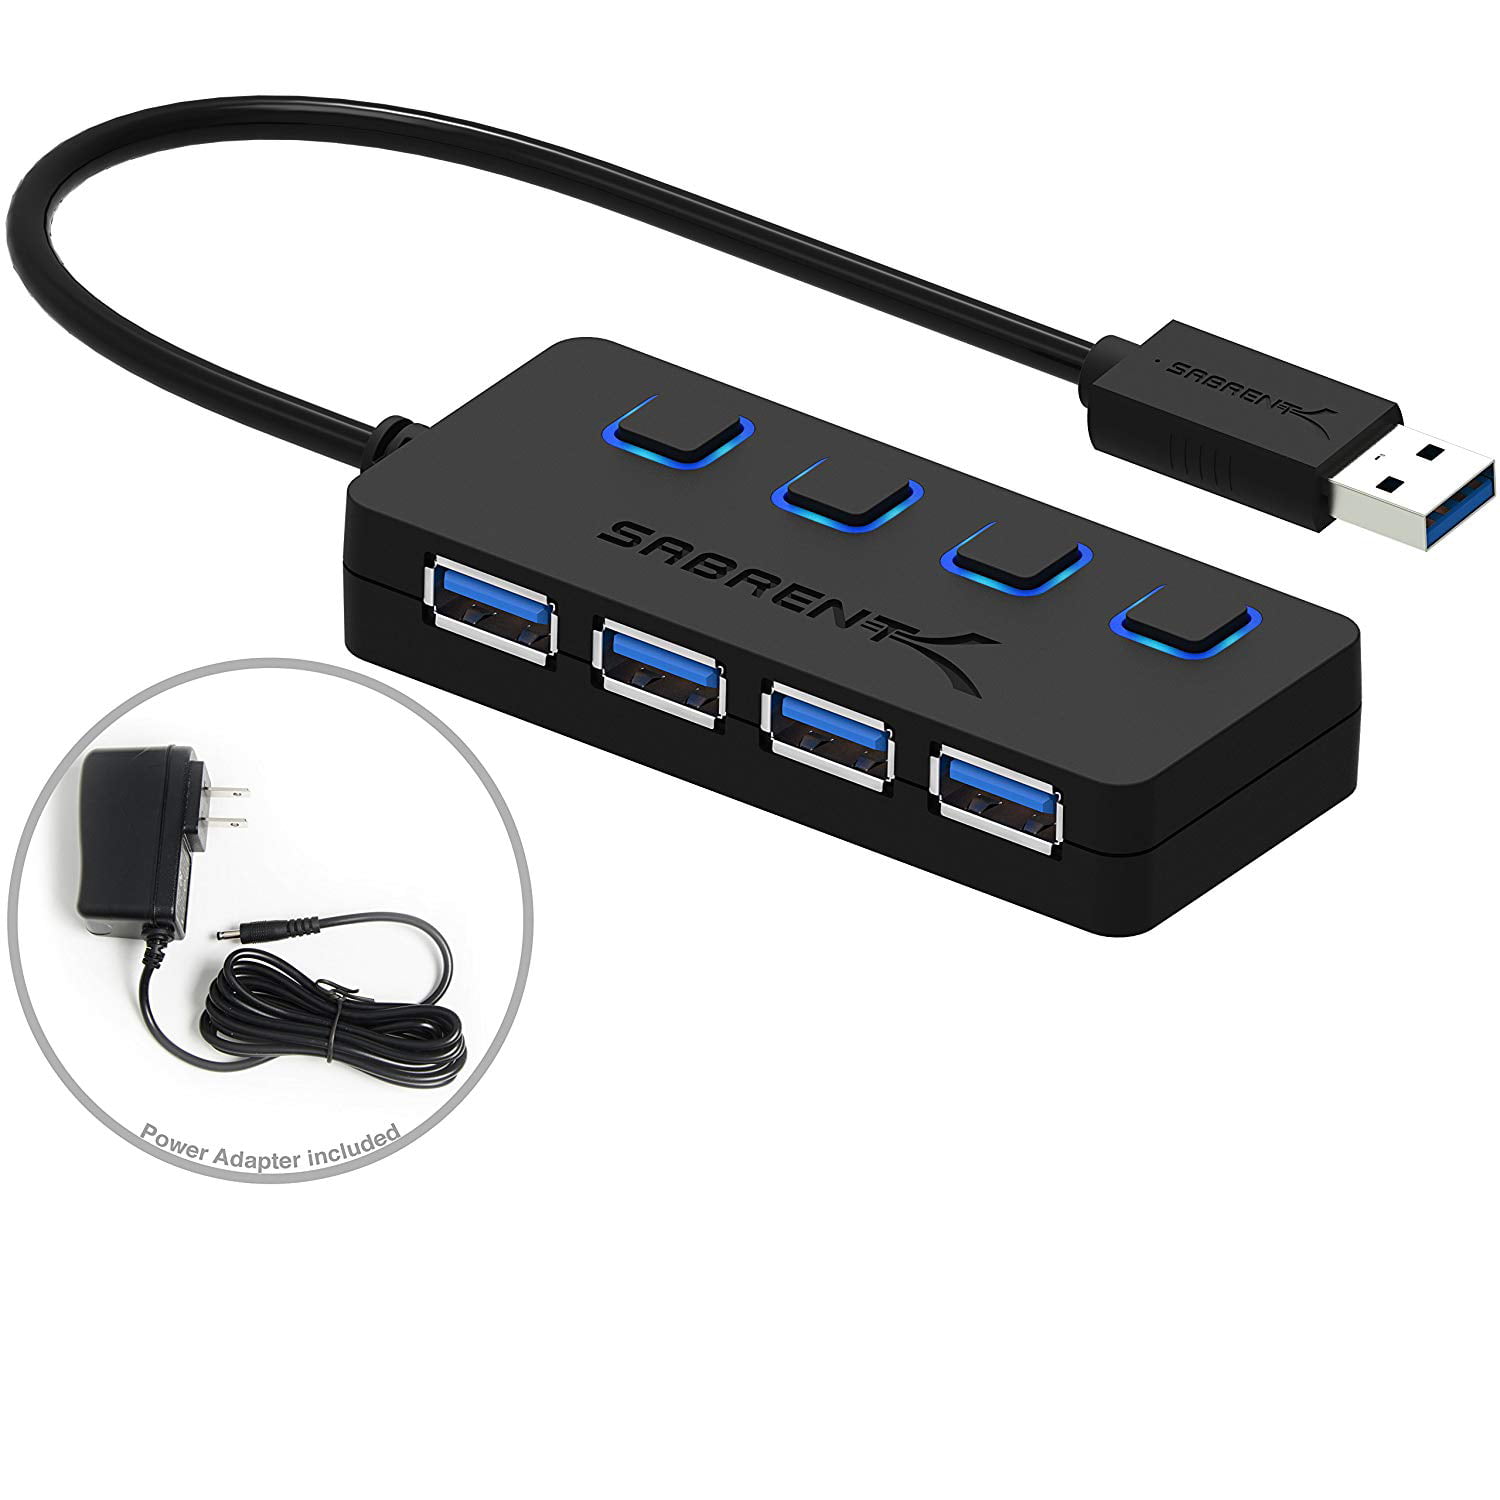 Basics 4 Port USB 3.0 Hub with 5V/2.5A power adapter 